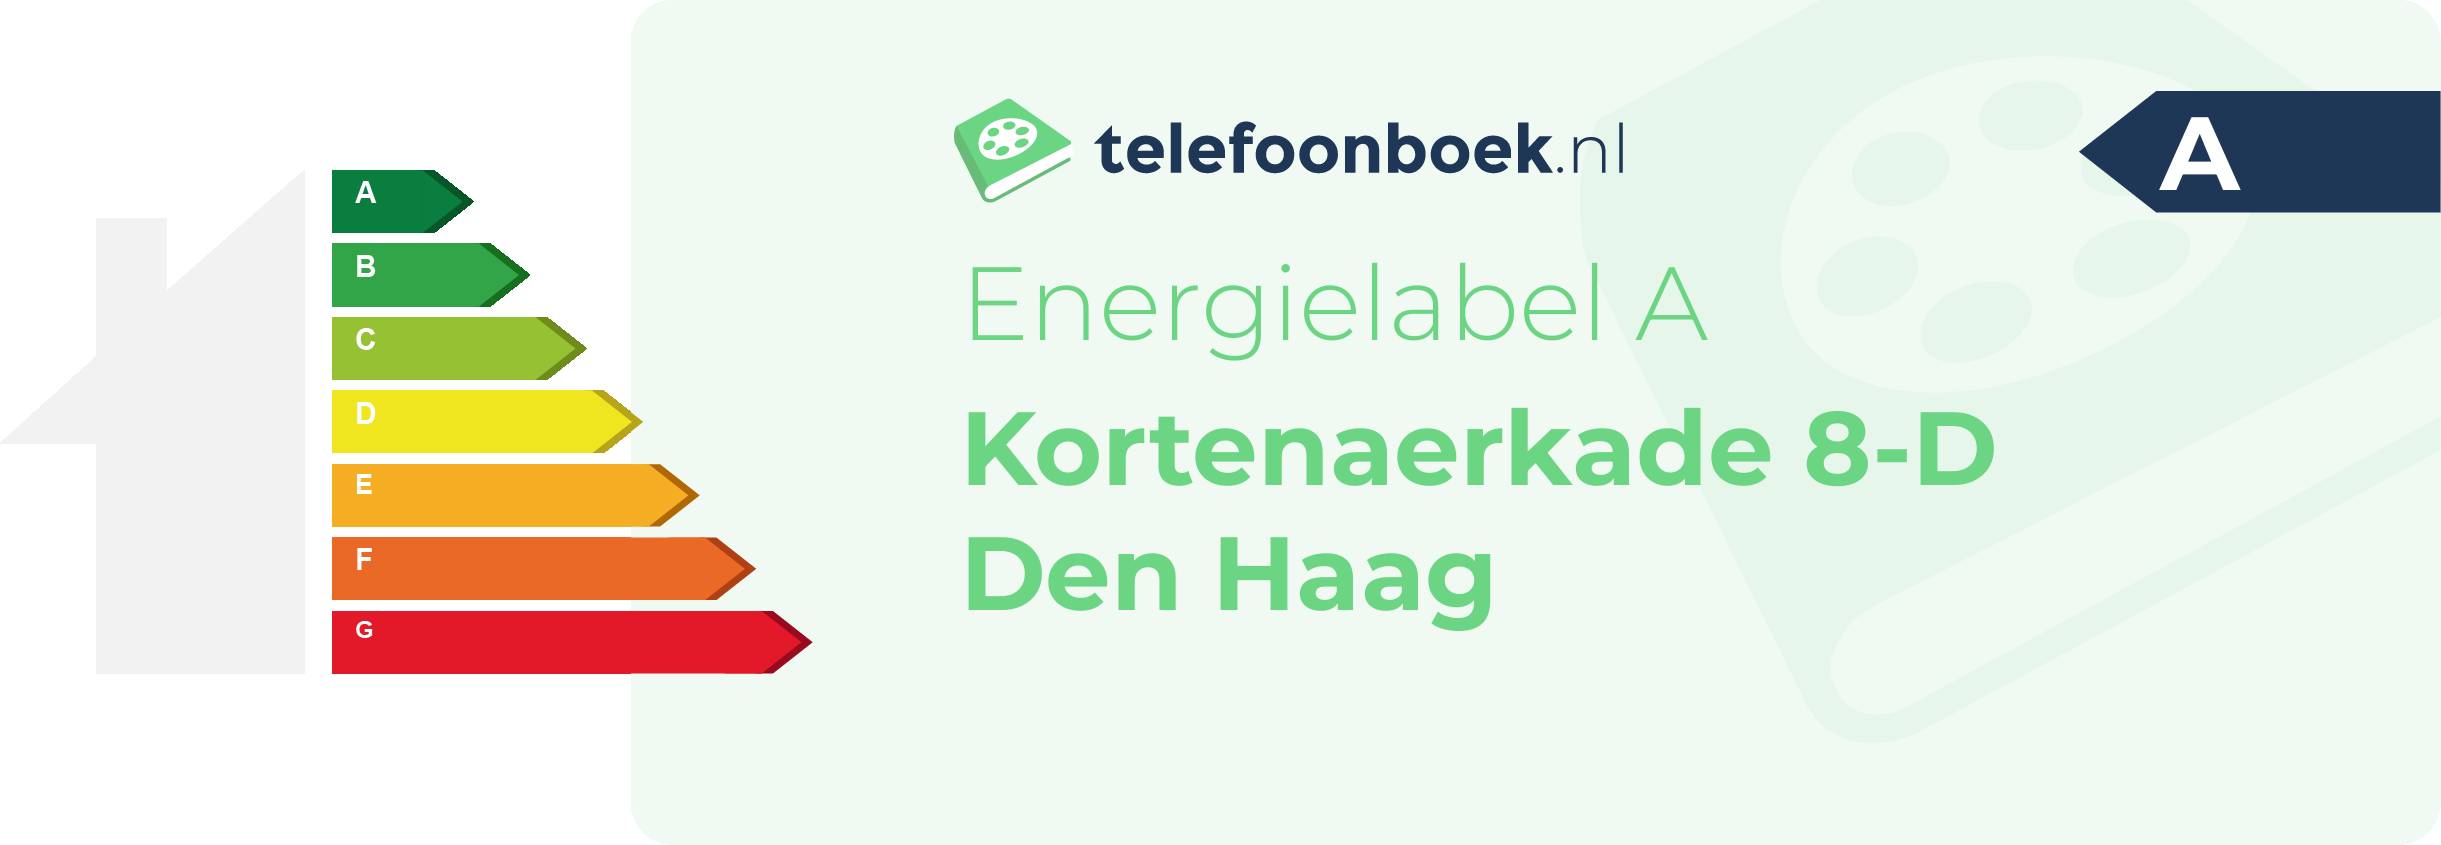 Energielabel Kortenaerkade 8-D Den Haag